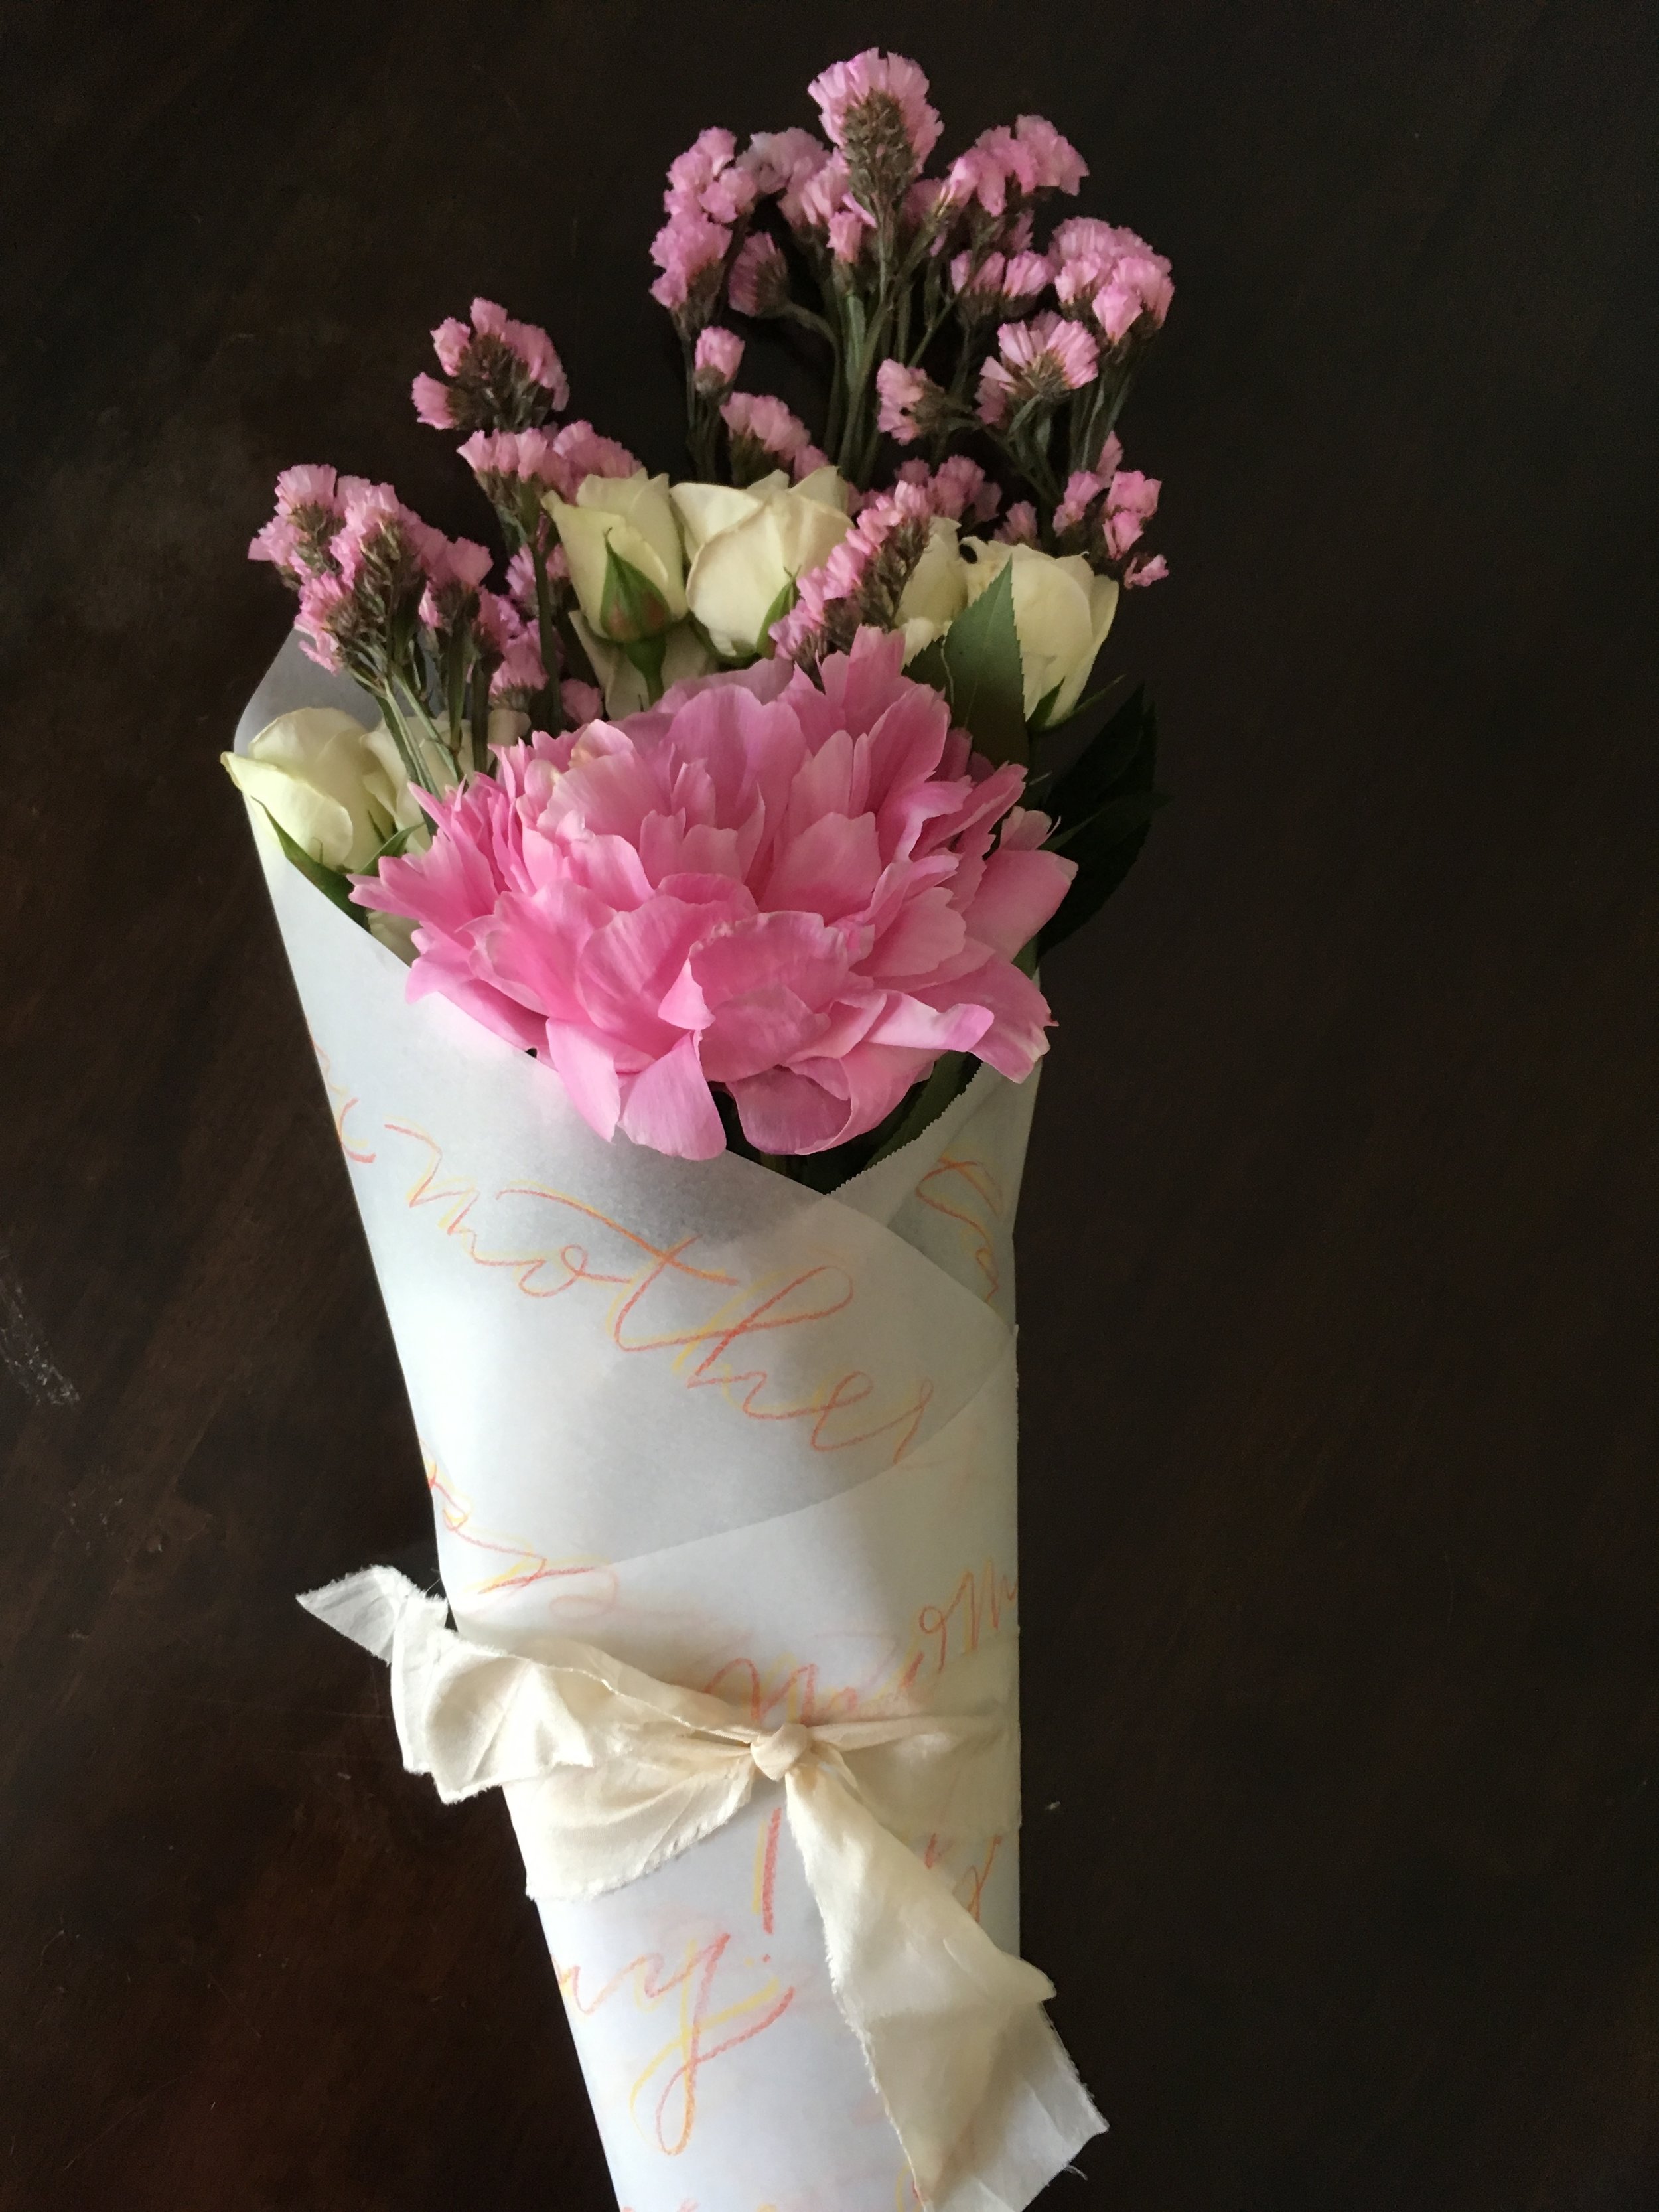 Unique Personalized: Custom Floral Tissue Paper for Bouquet